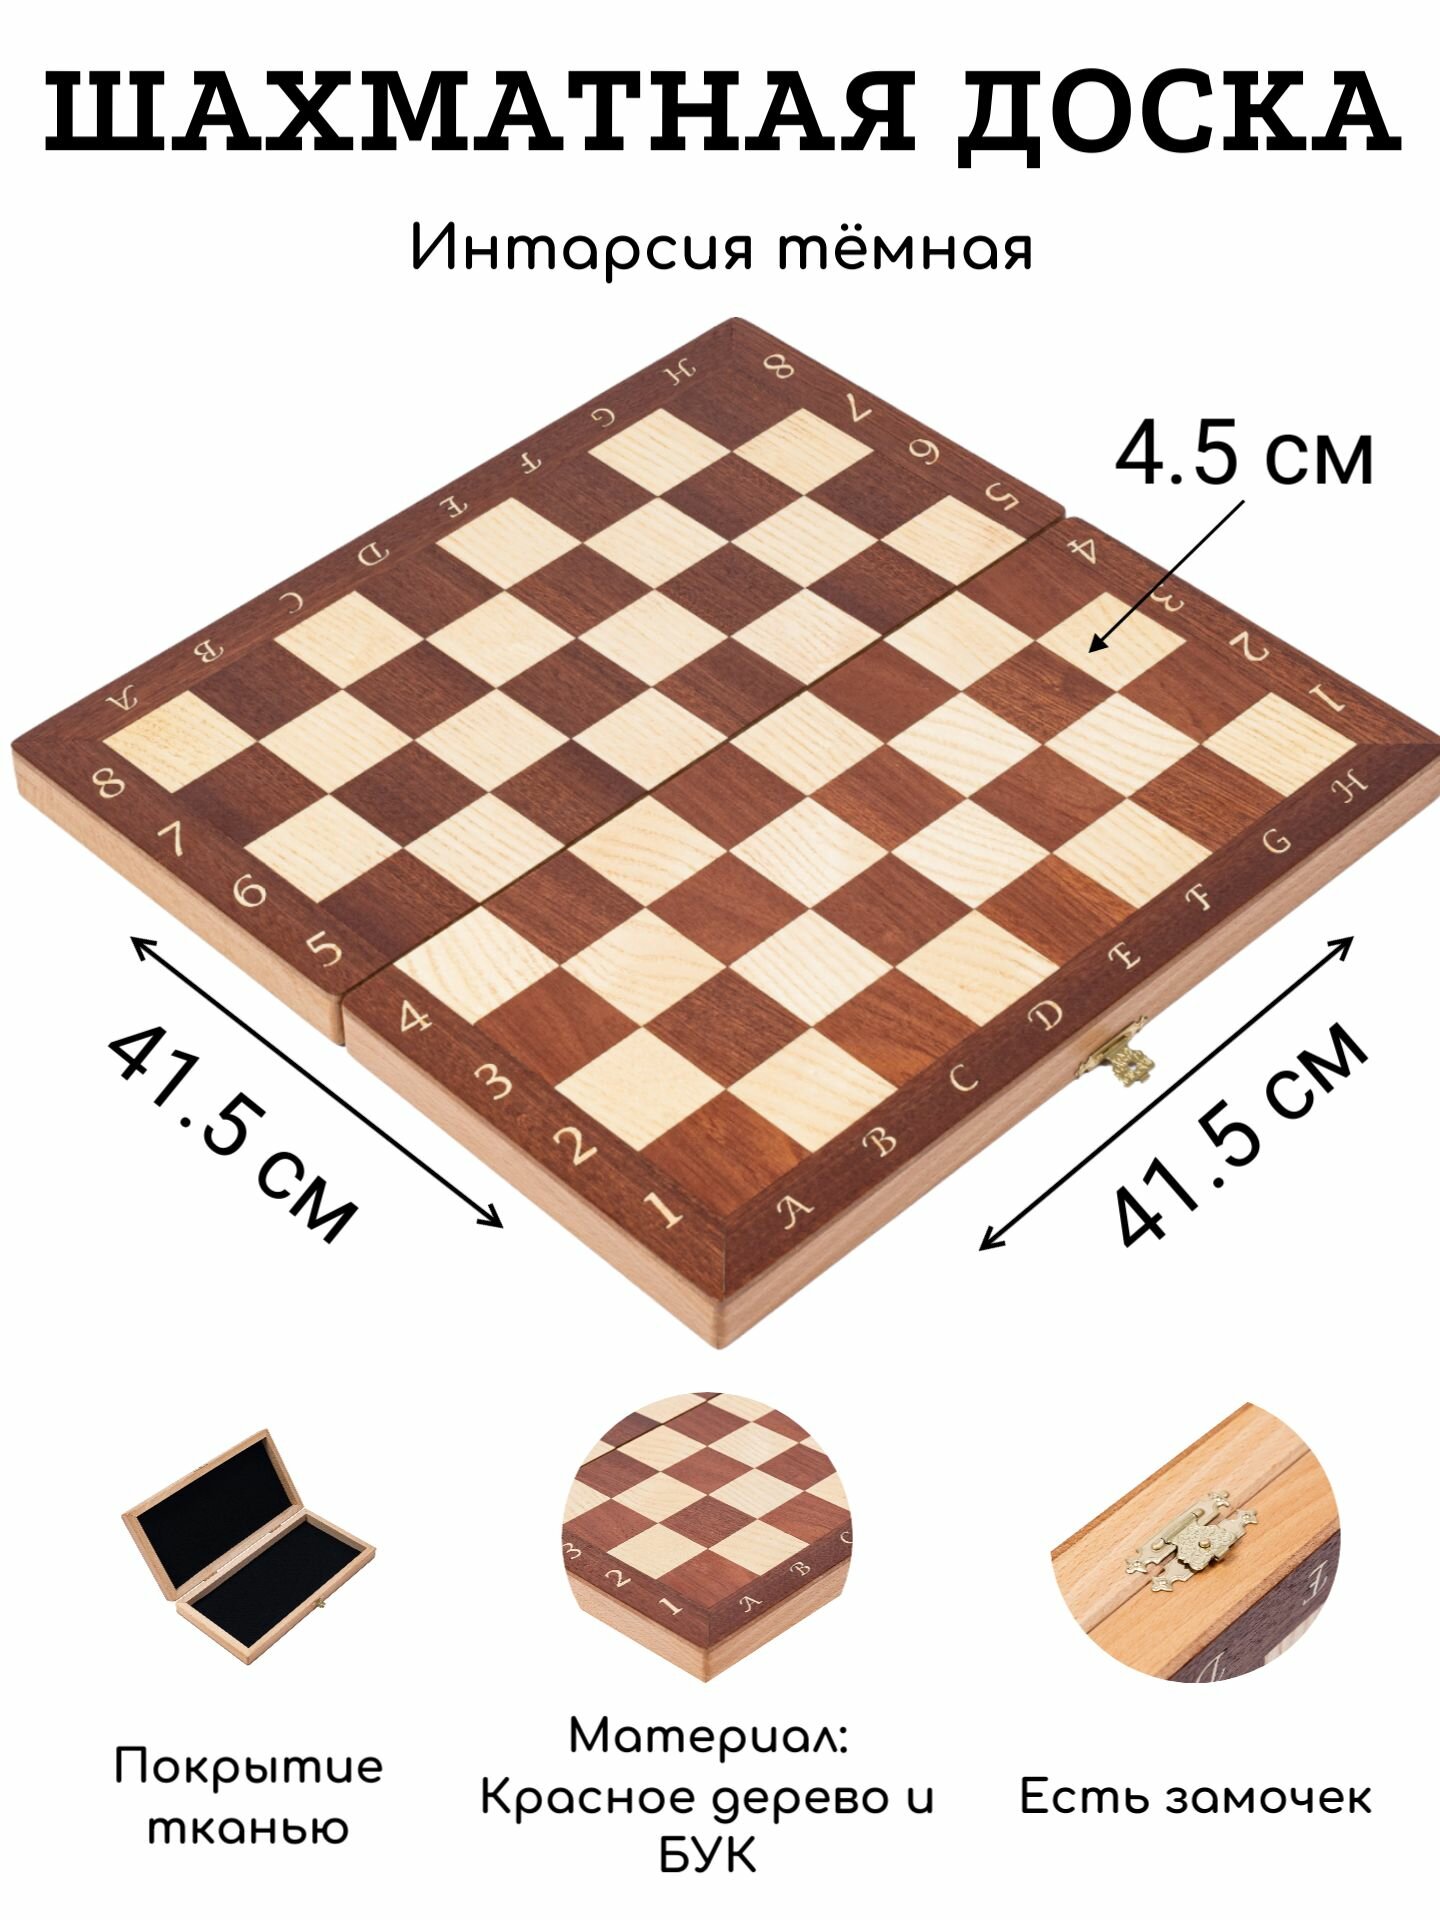 Шахматная доска без фигур Турнирная 41.5 см интарсия